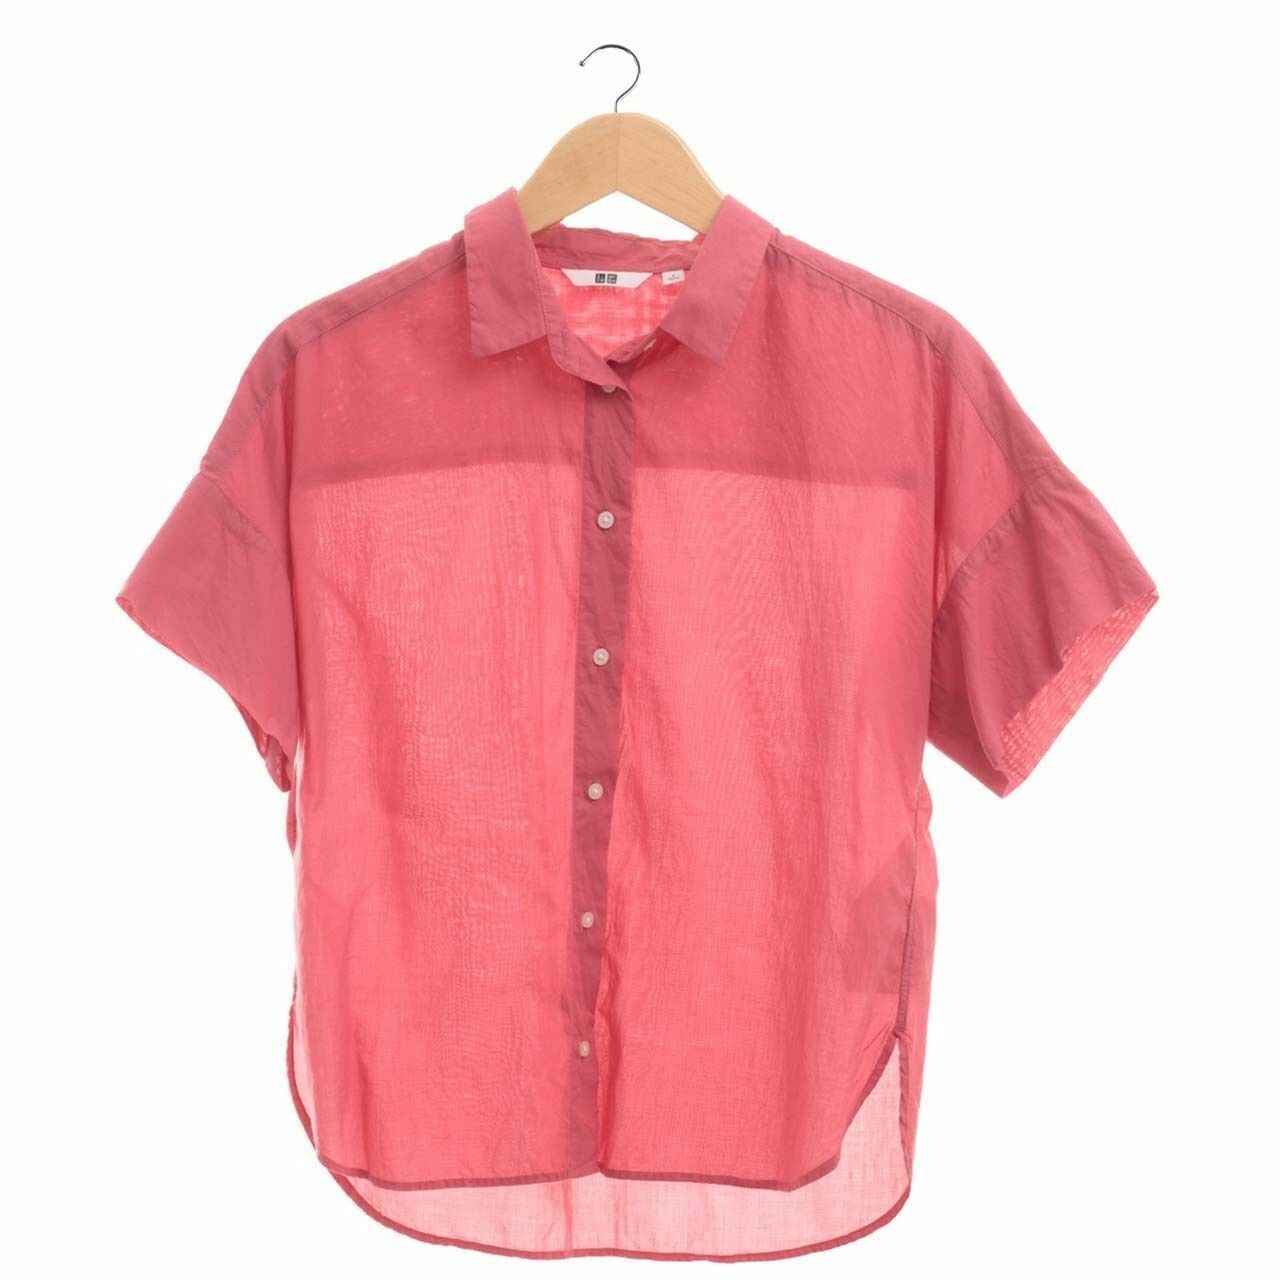 UNIQLO Pink Shirt